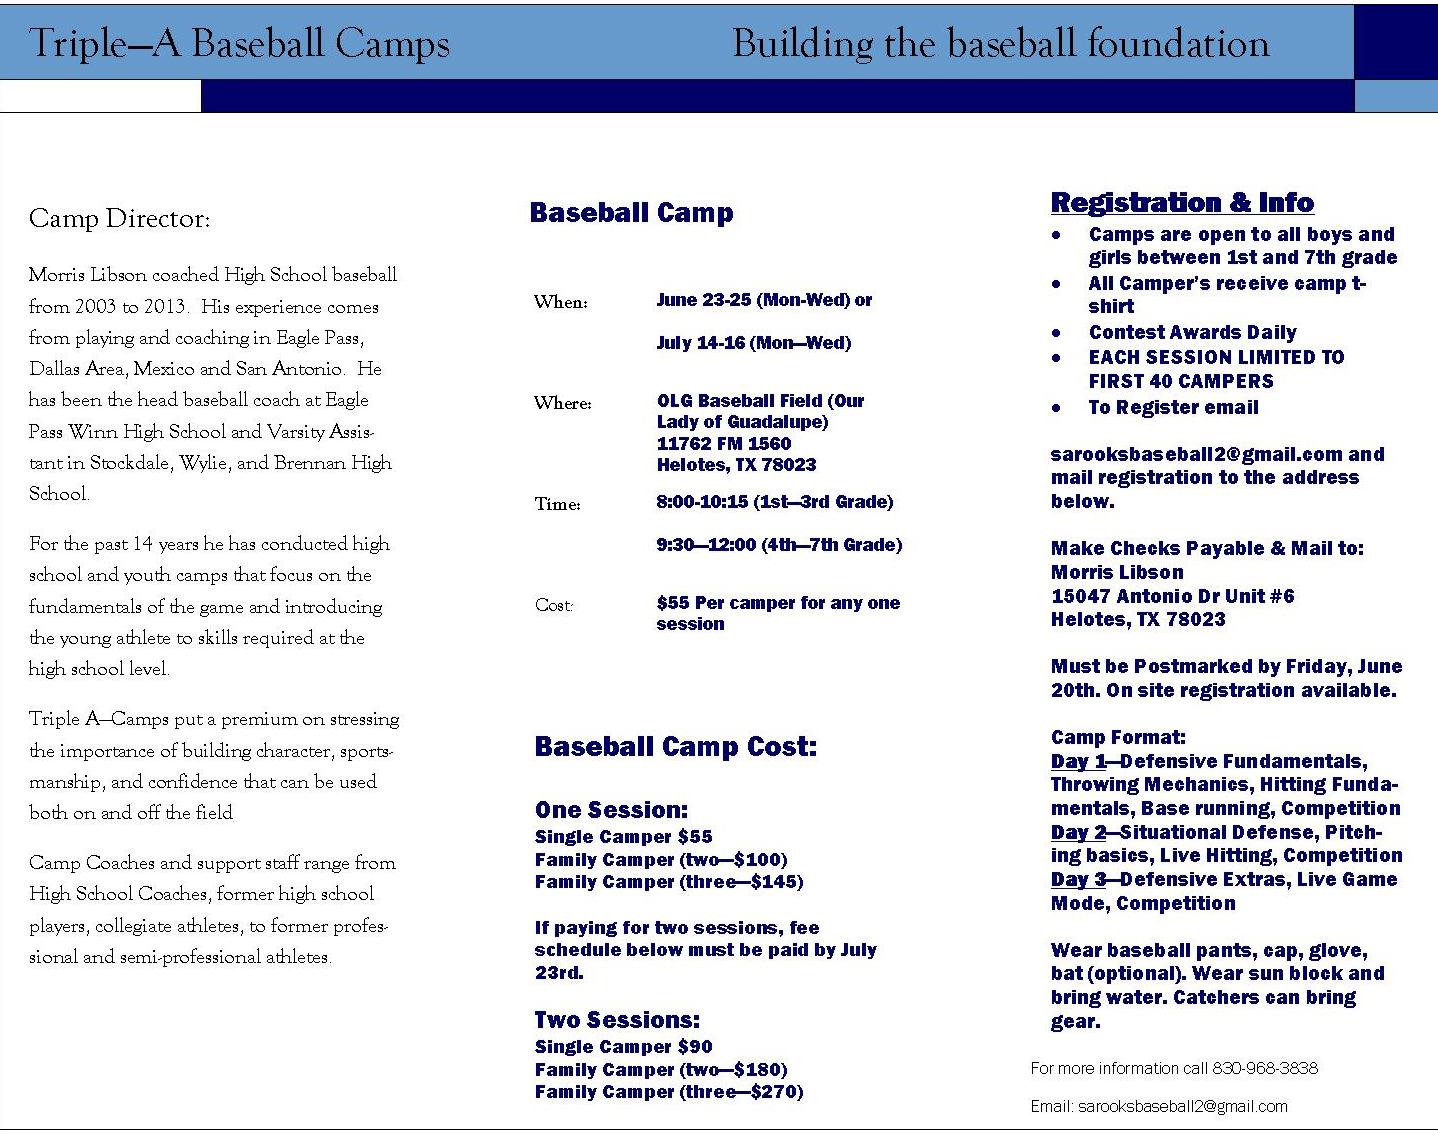 triple-a baseball camps page 2.jpg